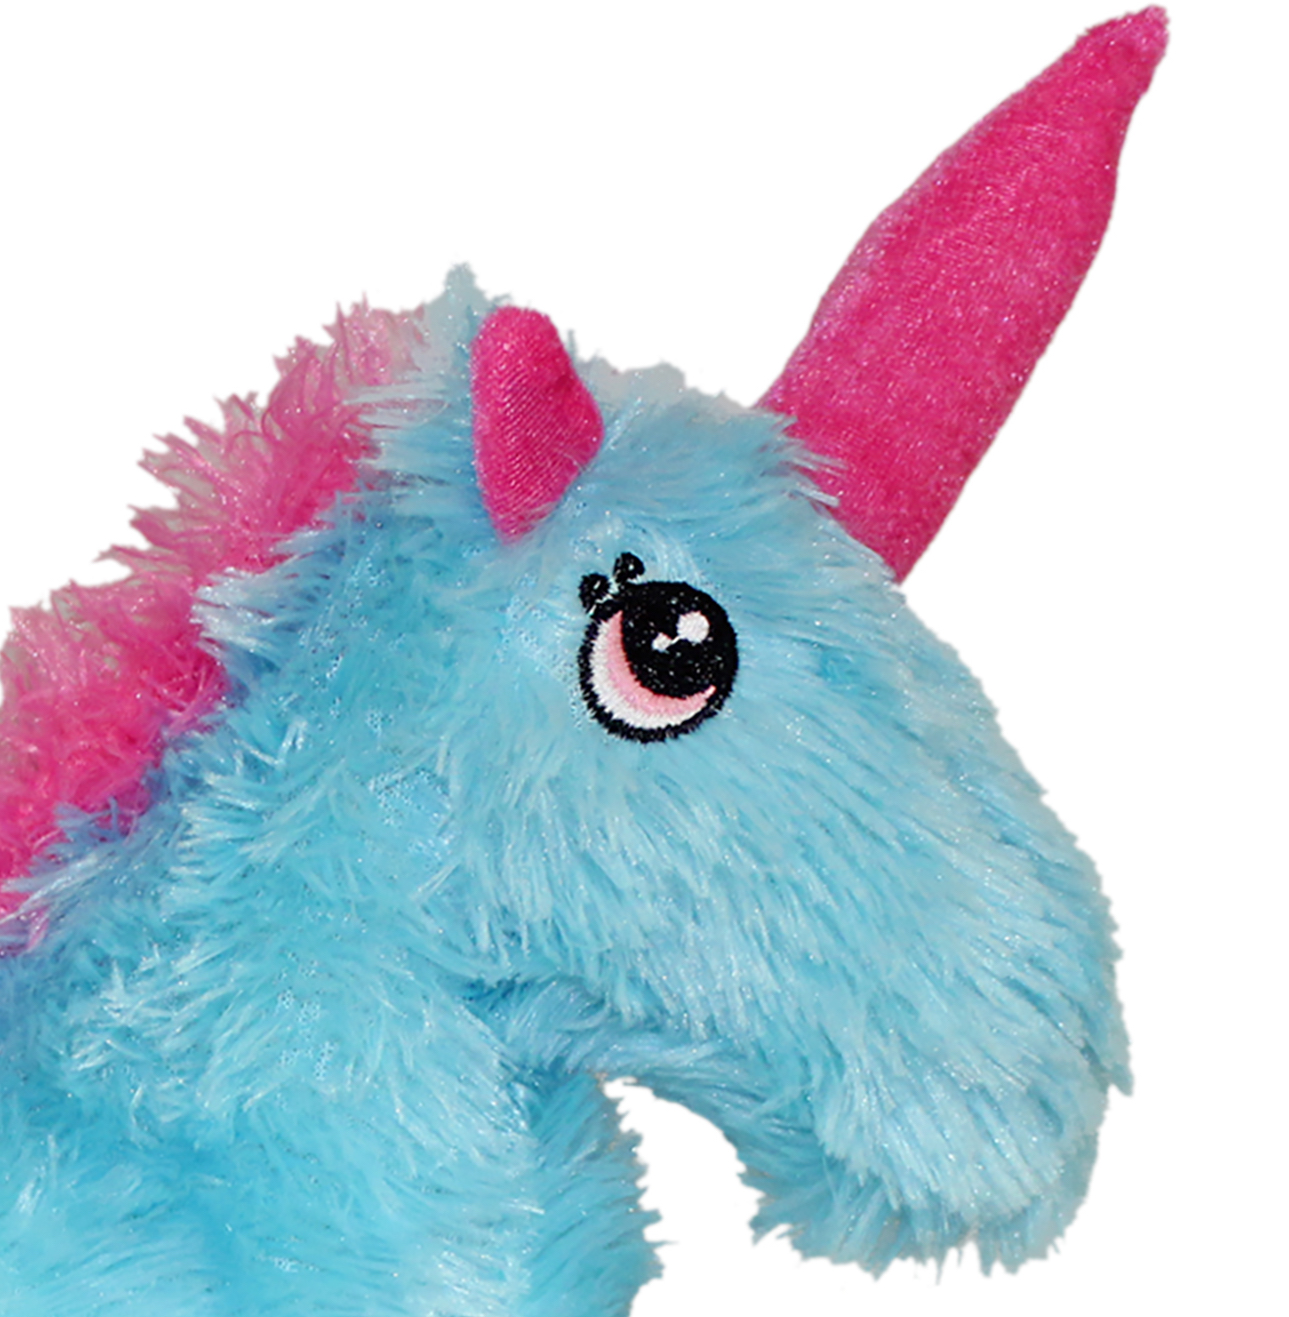 Plush Pal 22" Soft & Fluffy Blue Unicorn Stuffed Animal Toy - image 4 of 7